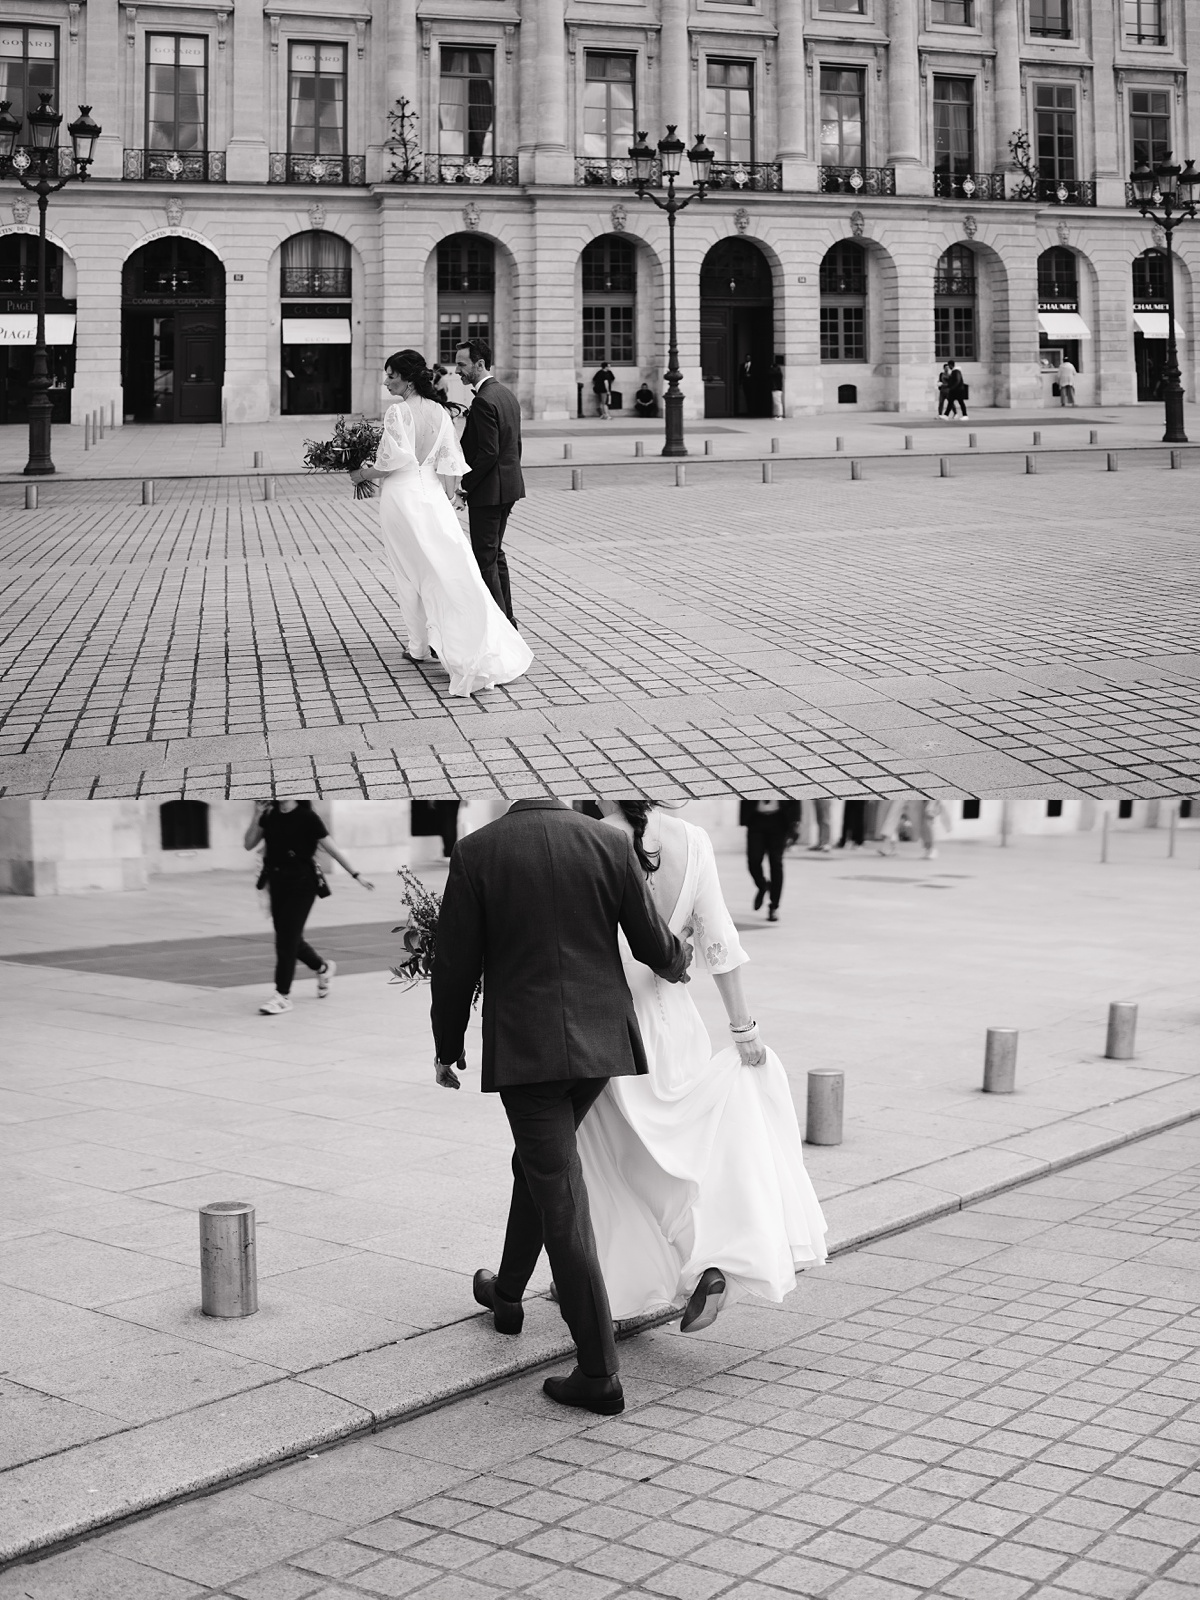 Photographe mariage chic Paris